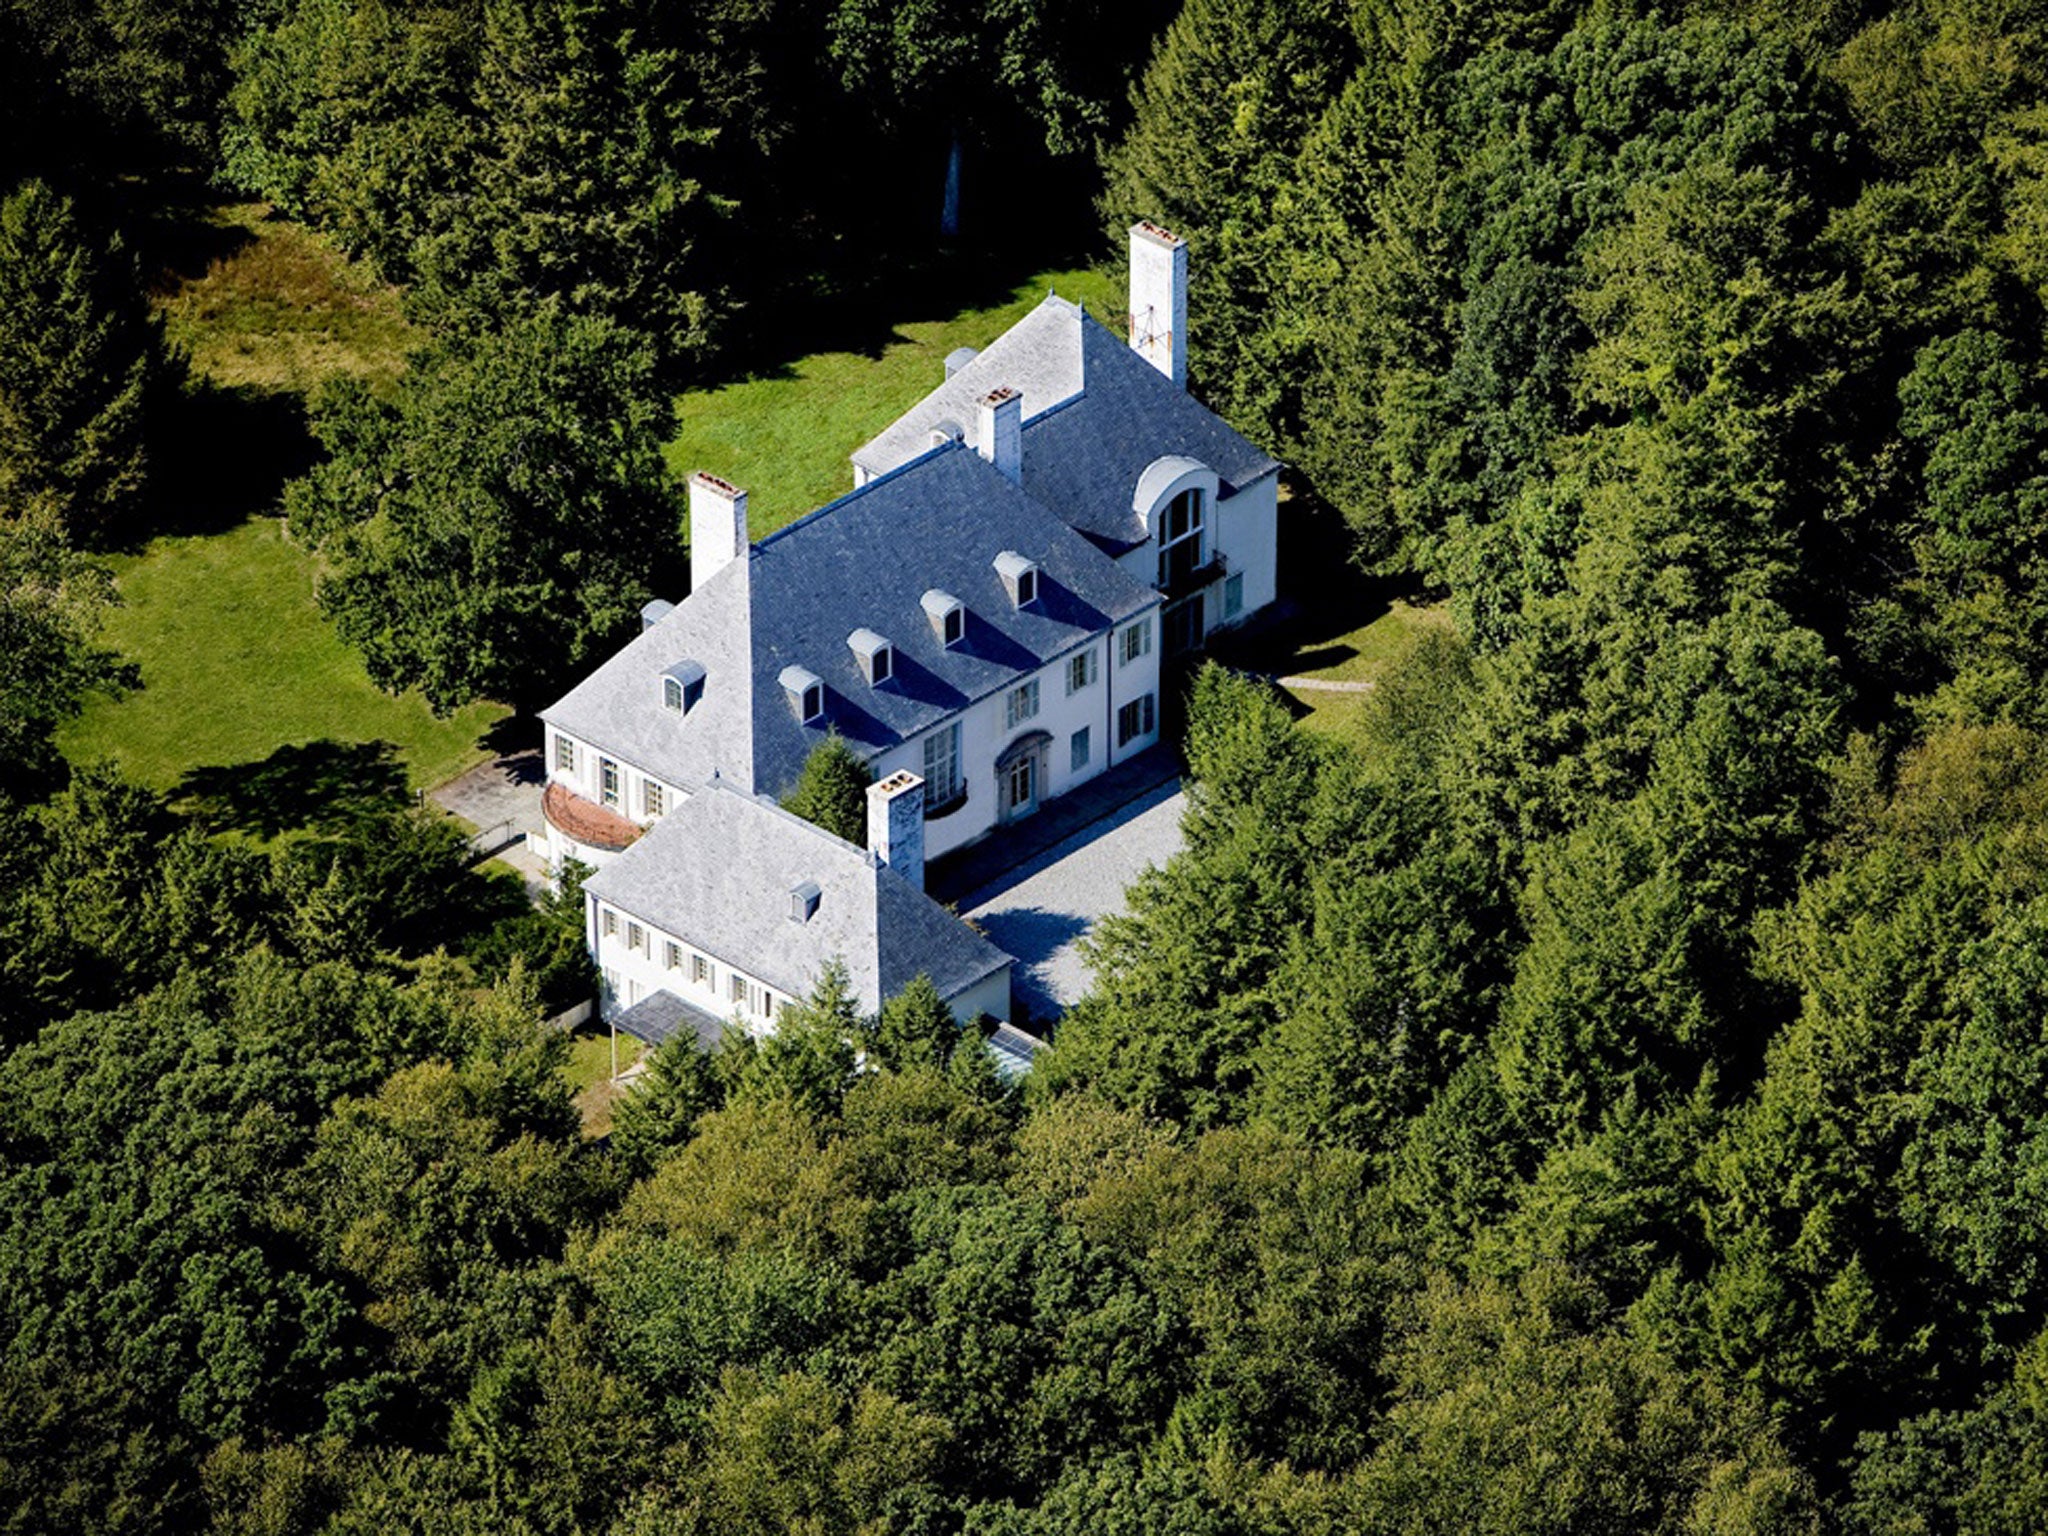 Clark bought this $24m Connecticut estate but left it empty for decades